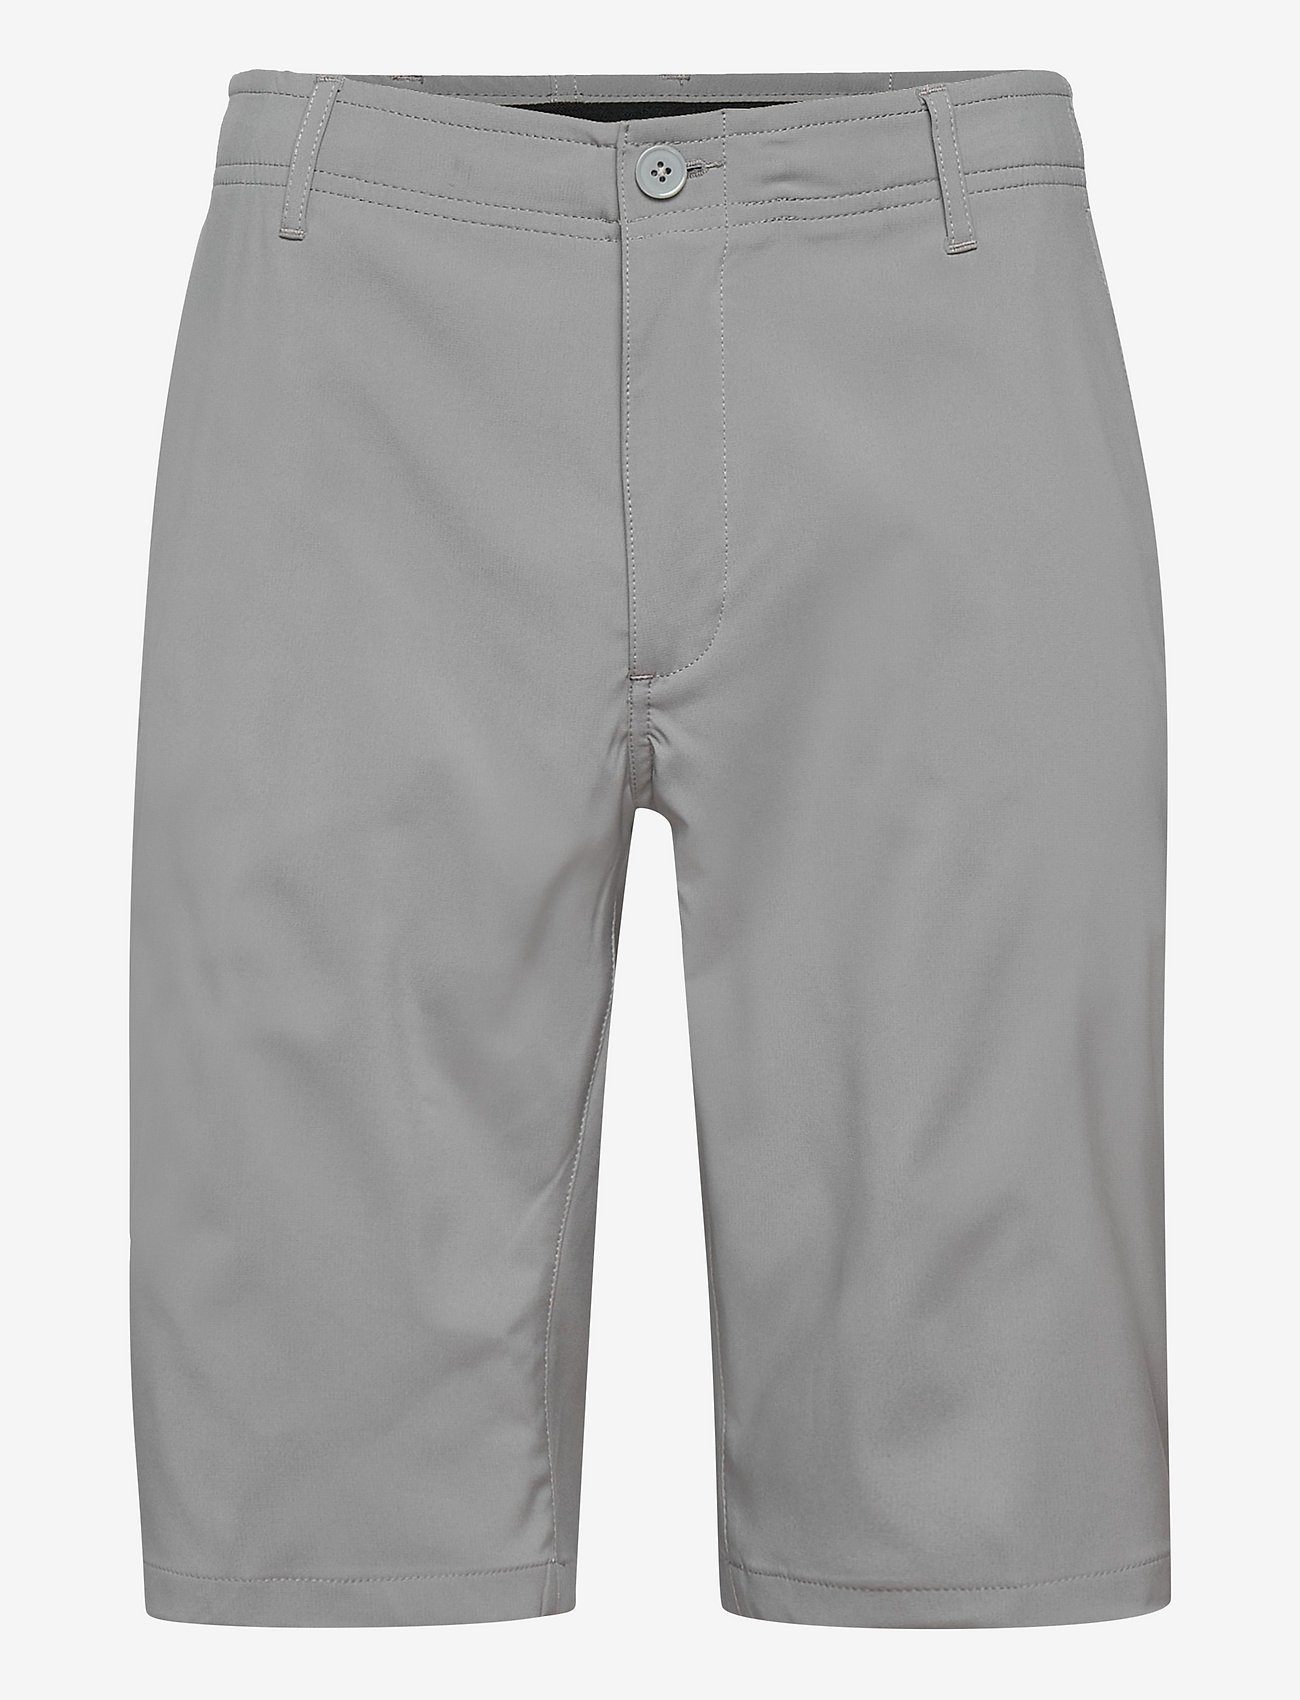 Abacus - Men Cleek flex shorts - golfbroeken - grey - 0